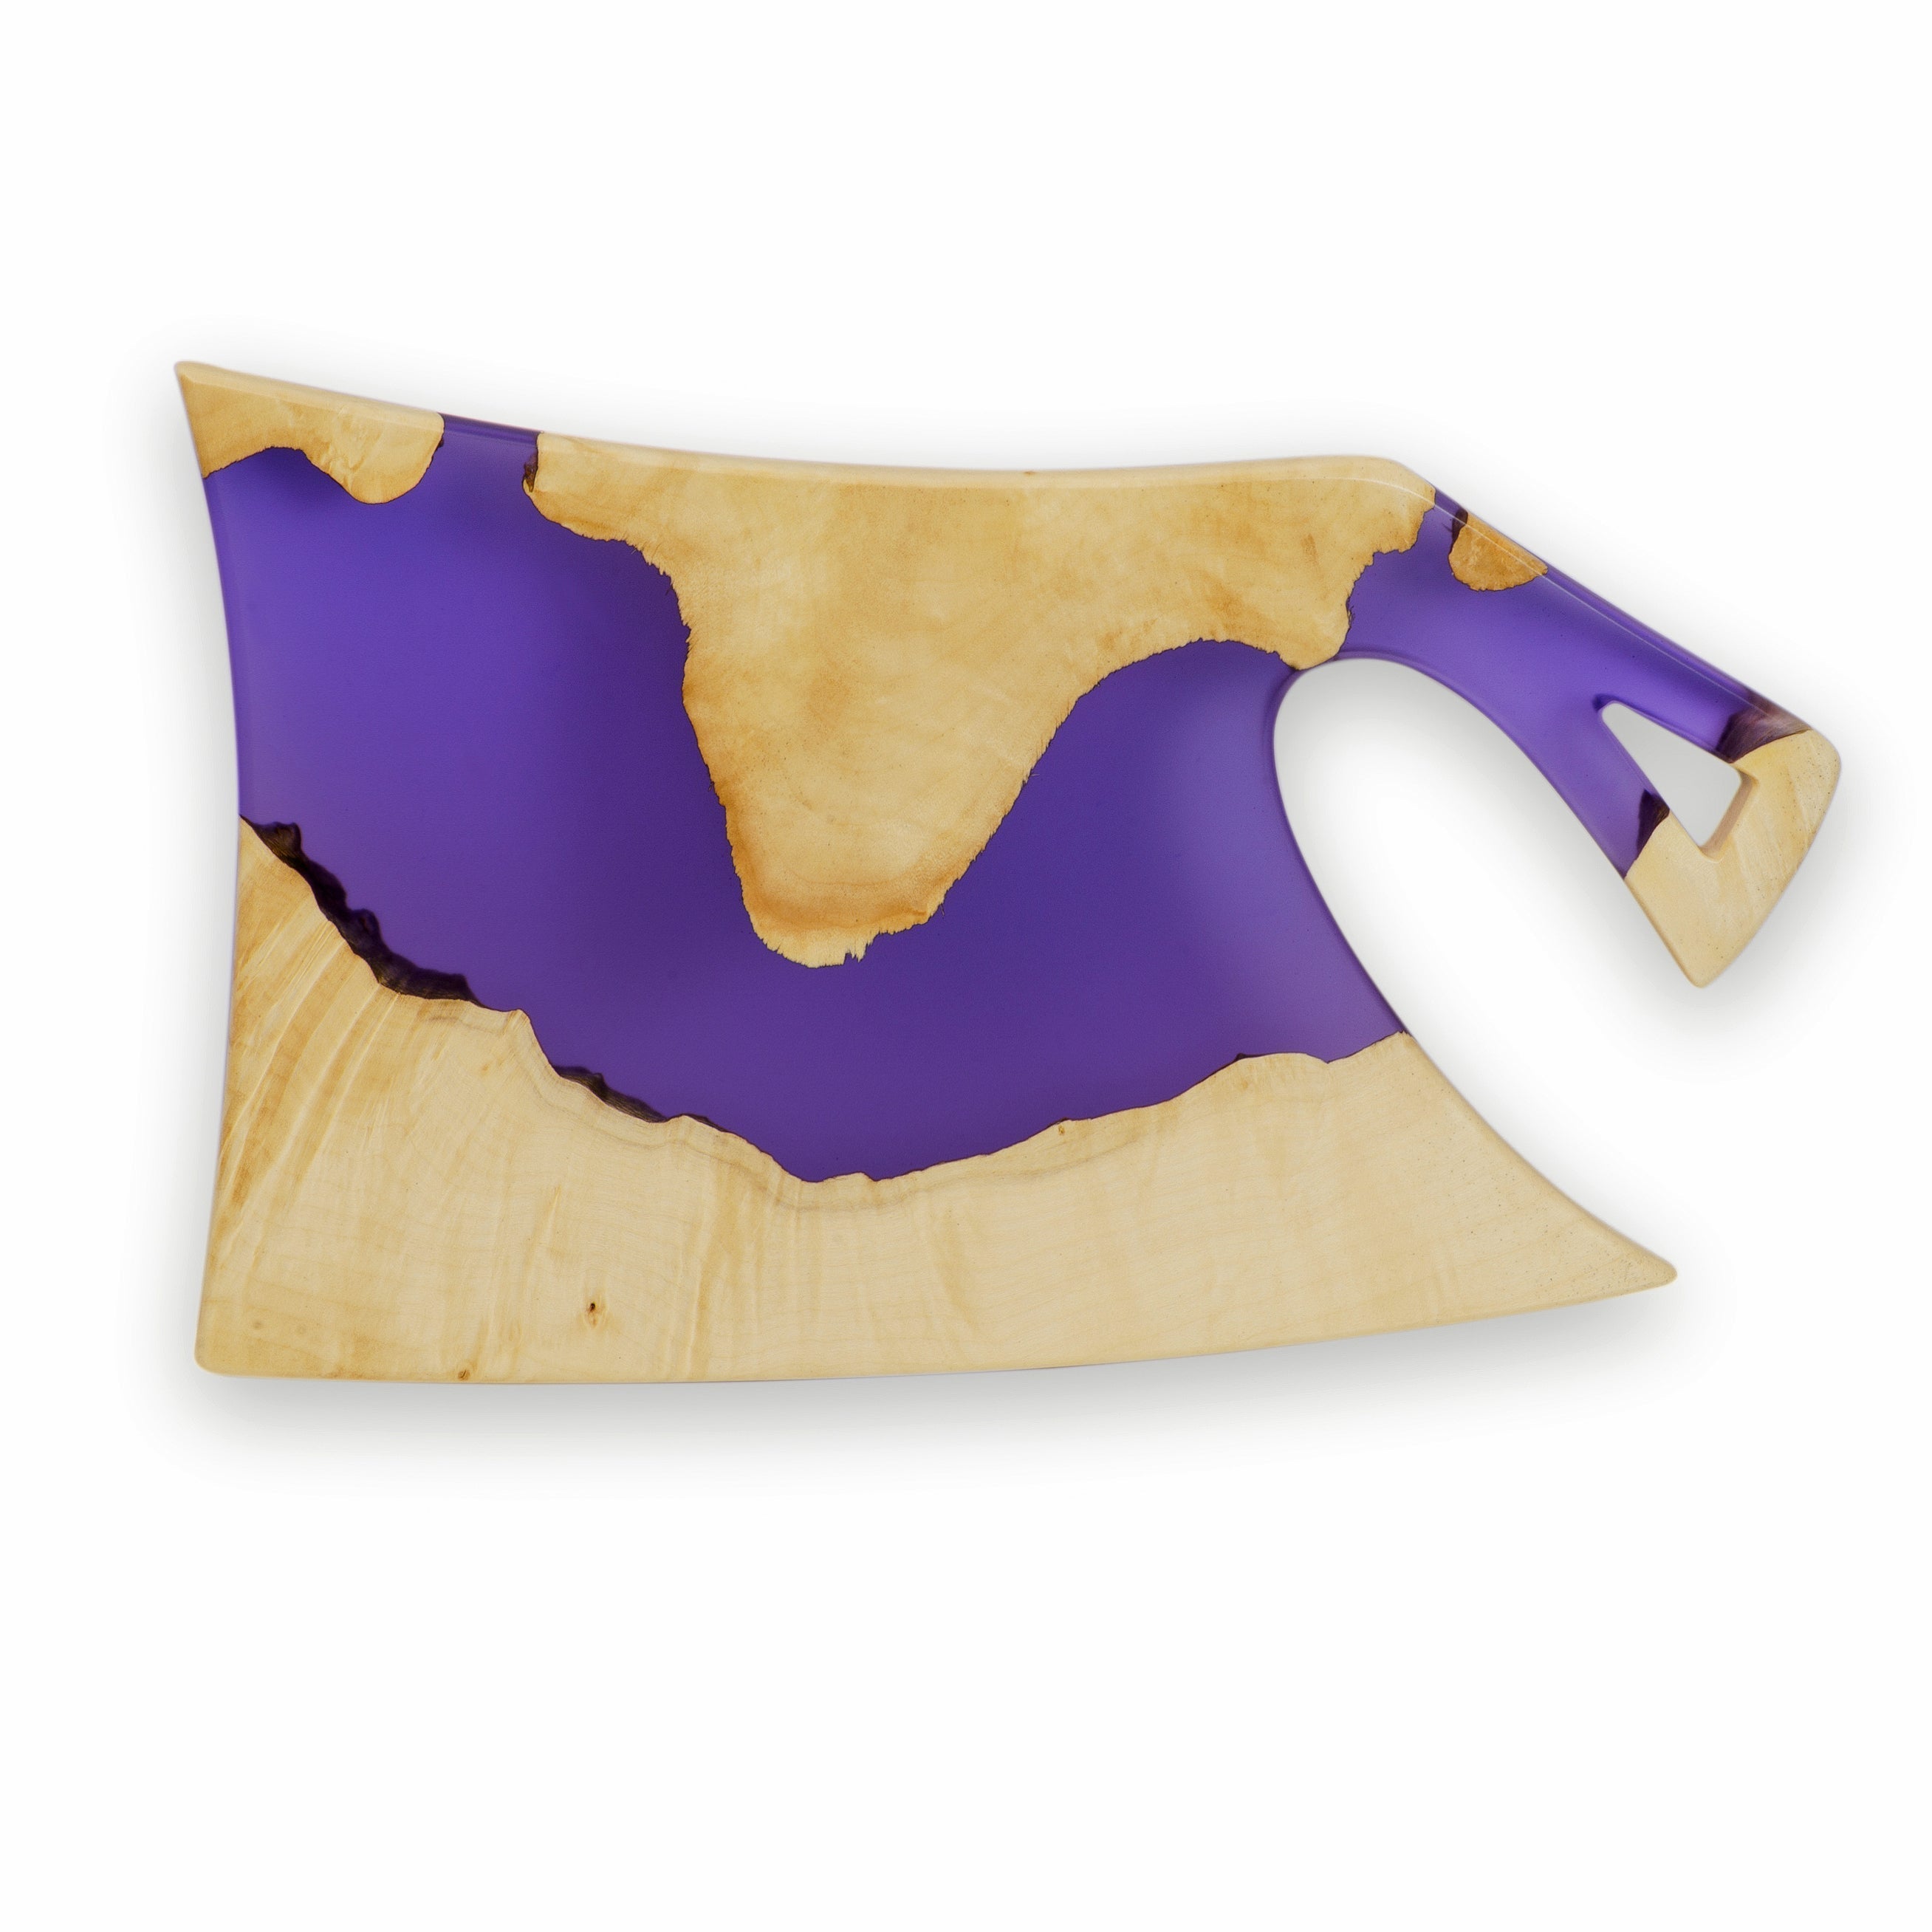 Wood & Resin Charcuterie Board CLEAVER – Maple Purple